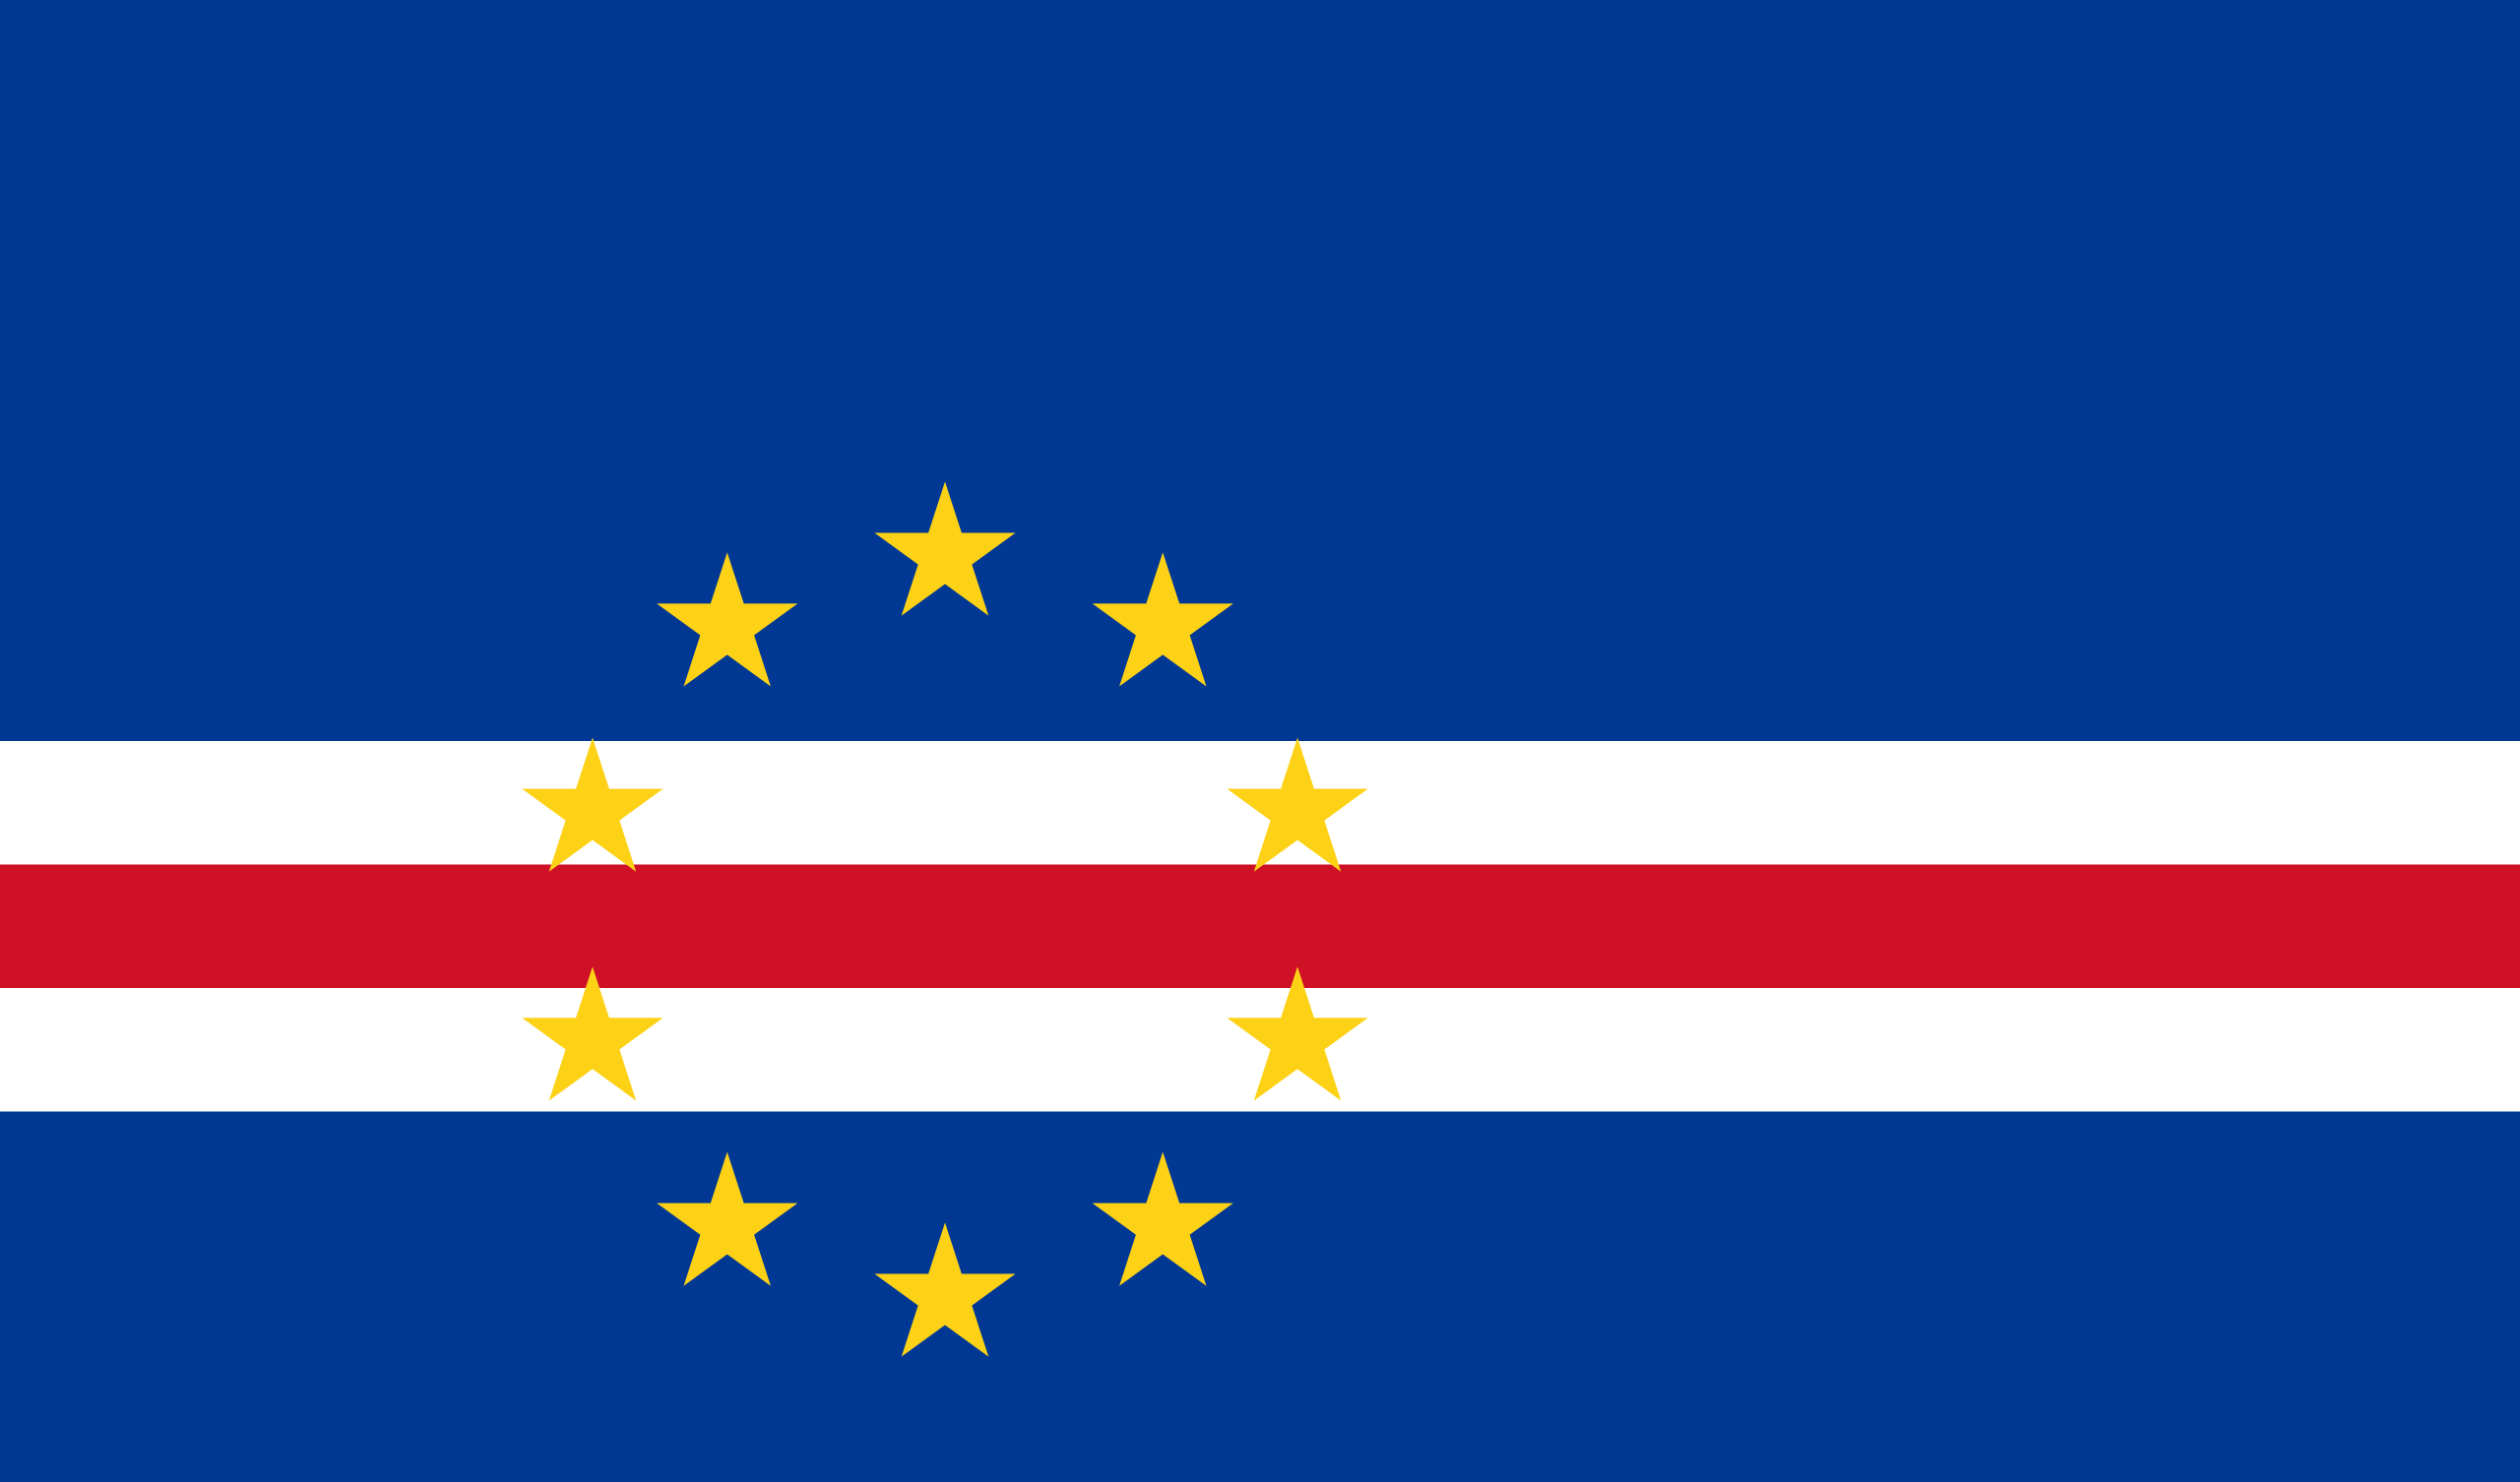 Cabo Verde's flag